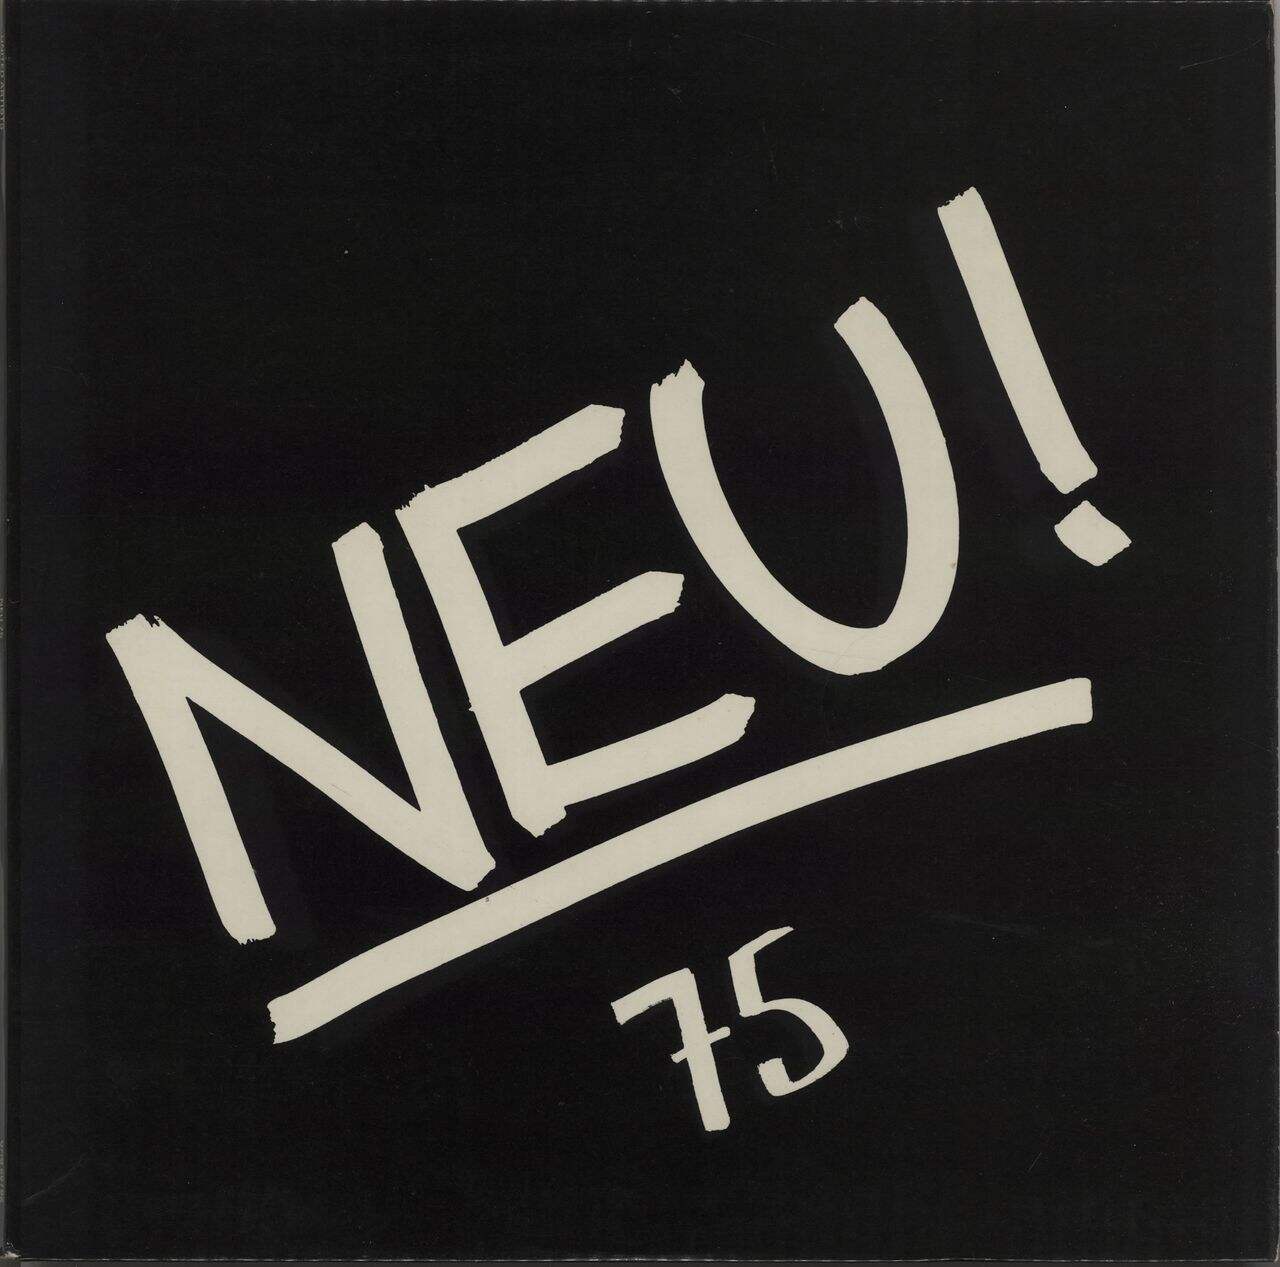 Neu '75 - Original UK Vinyl LP